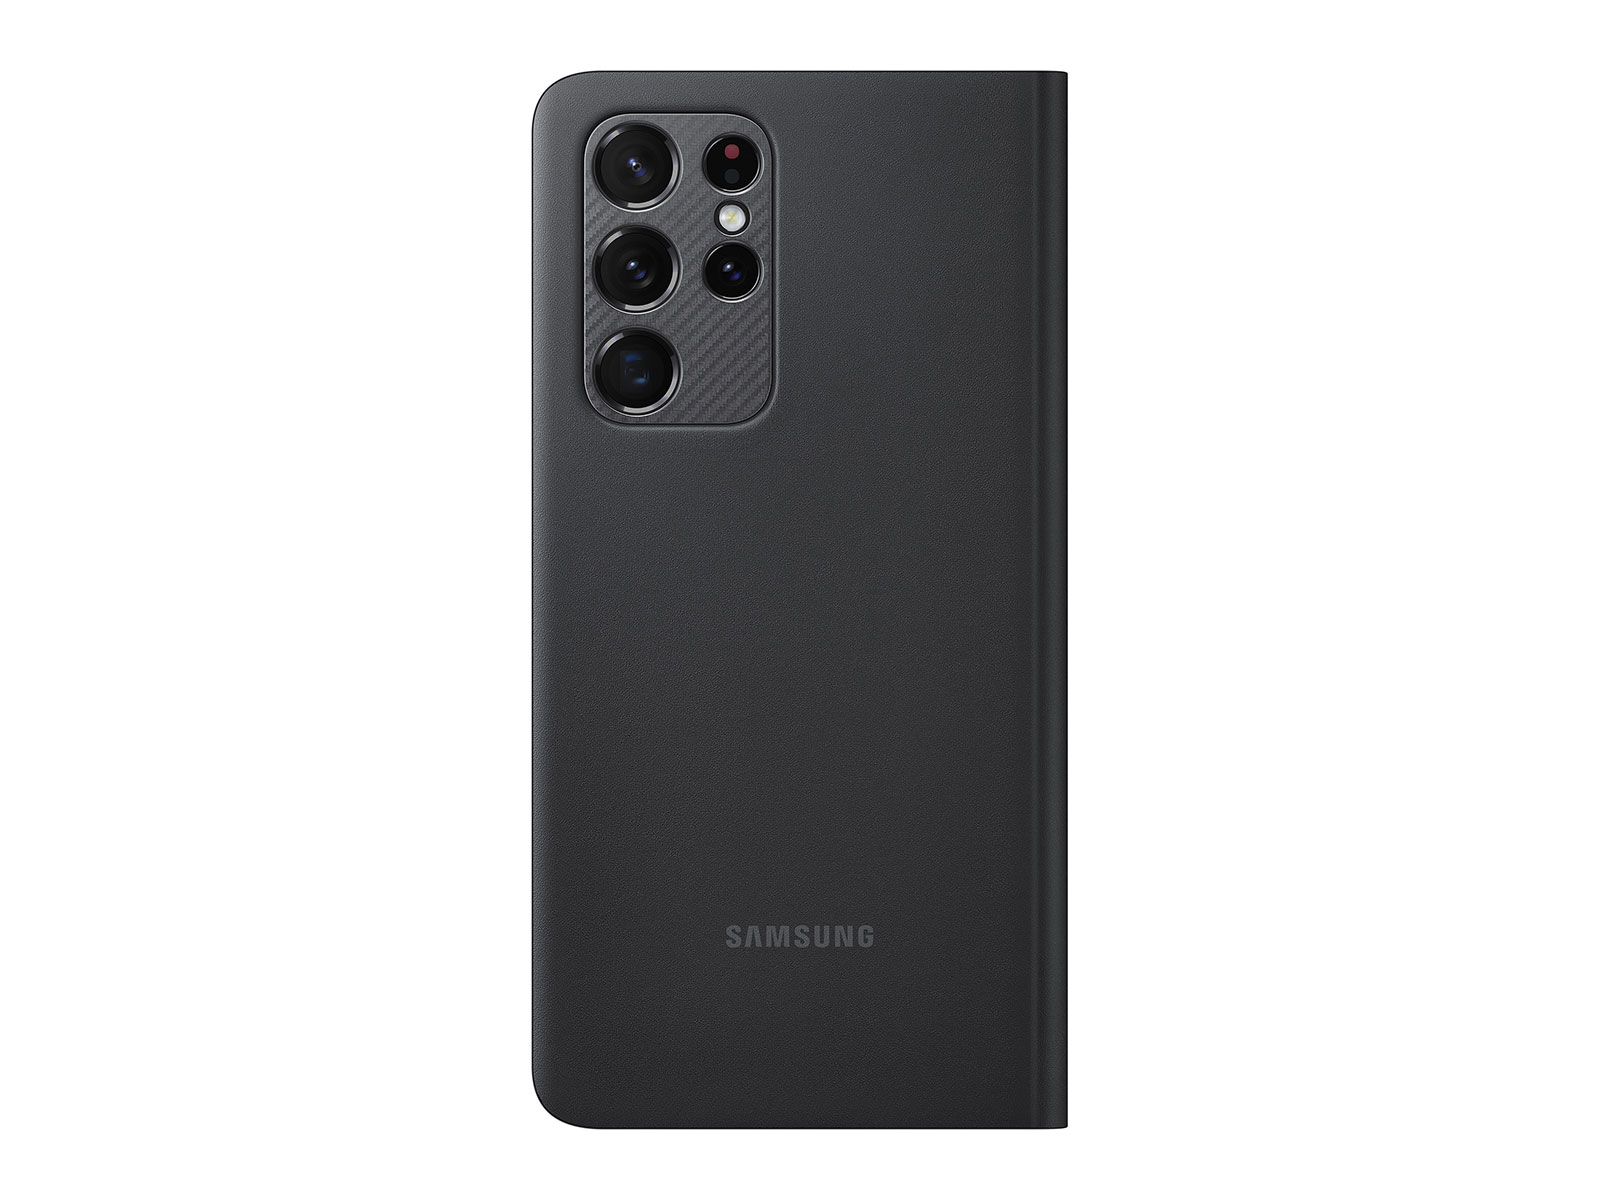 Samsung Galaxy S21 Ultra 5G review: Design, build, handling